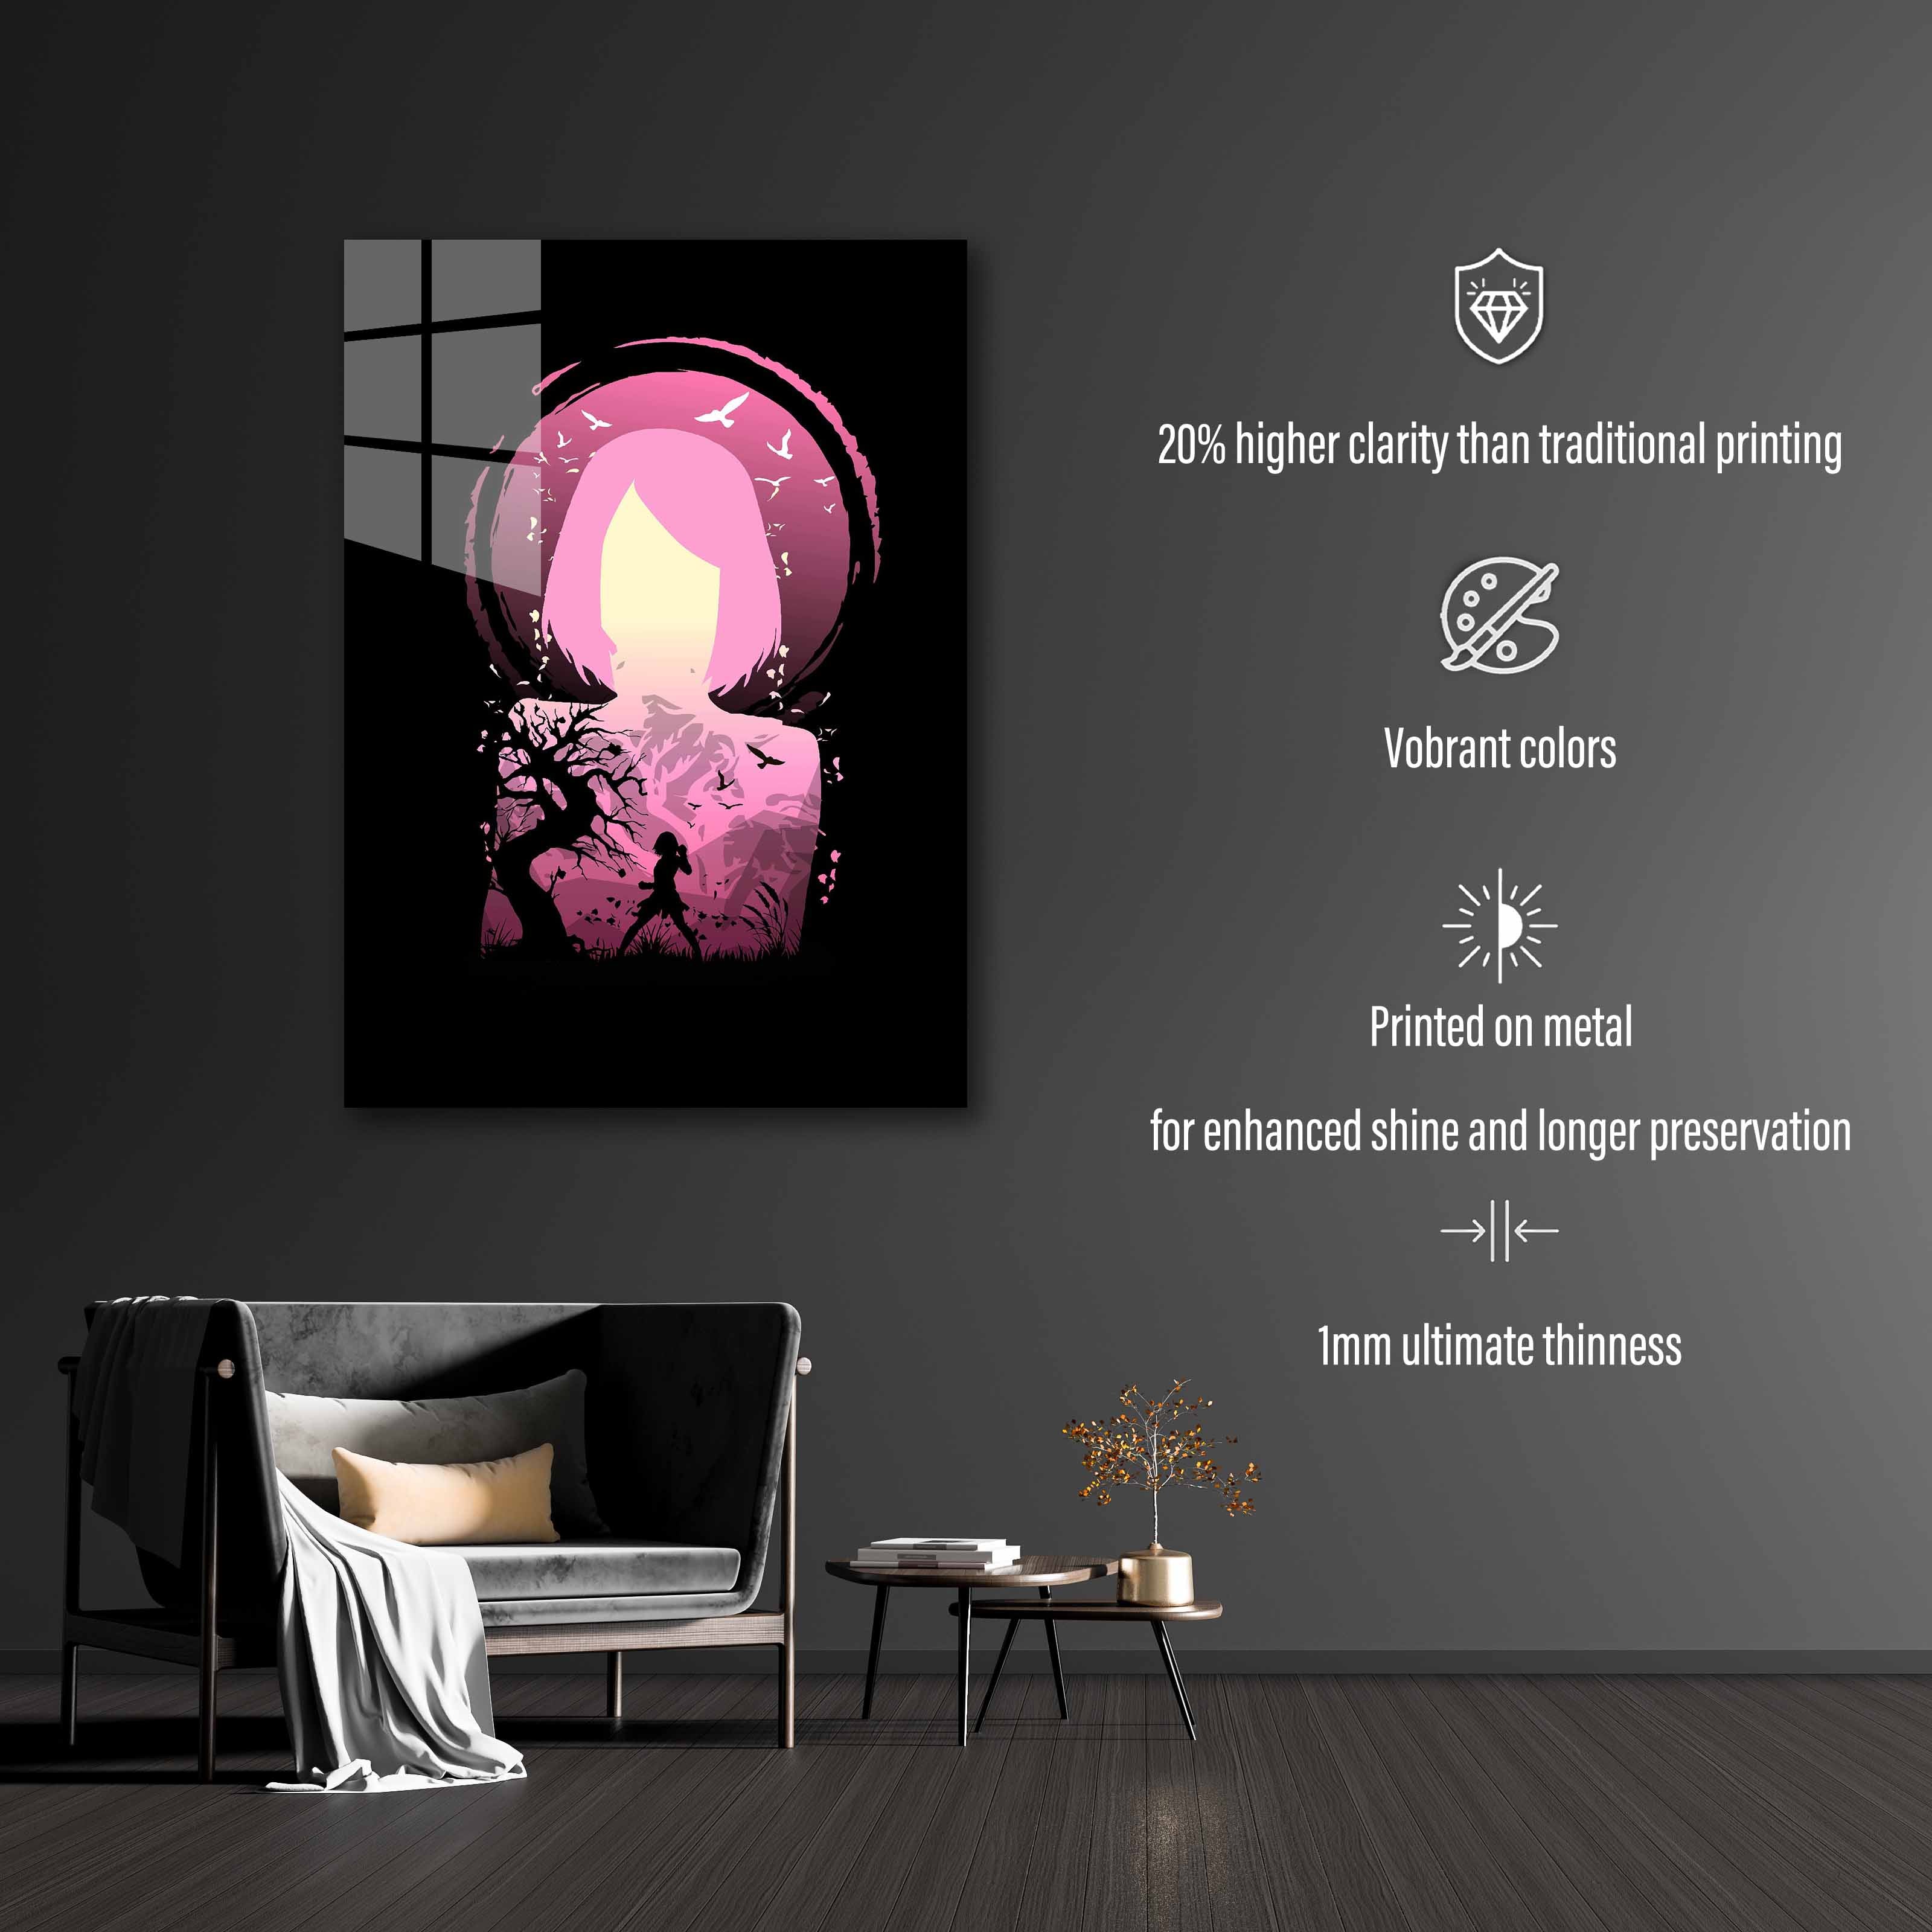 Sakura-designed by @Doublede Design